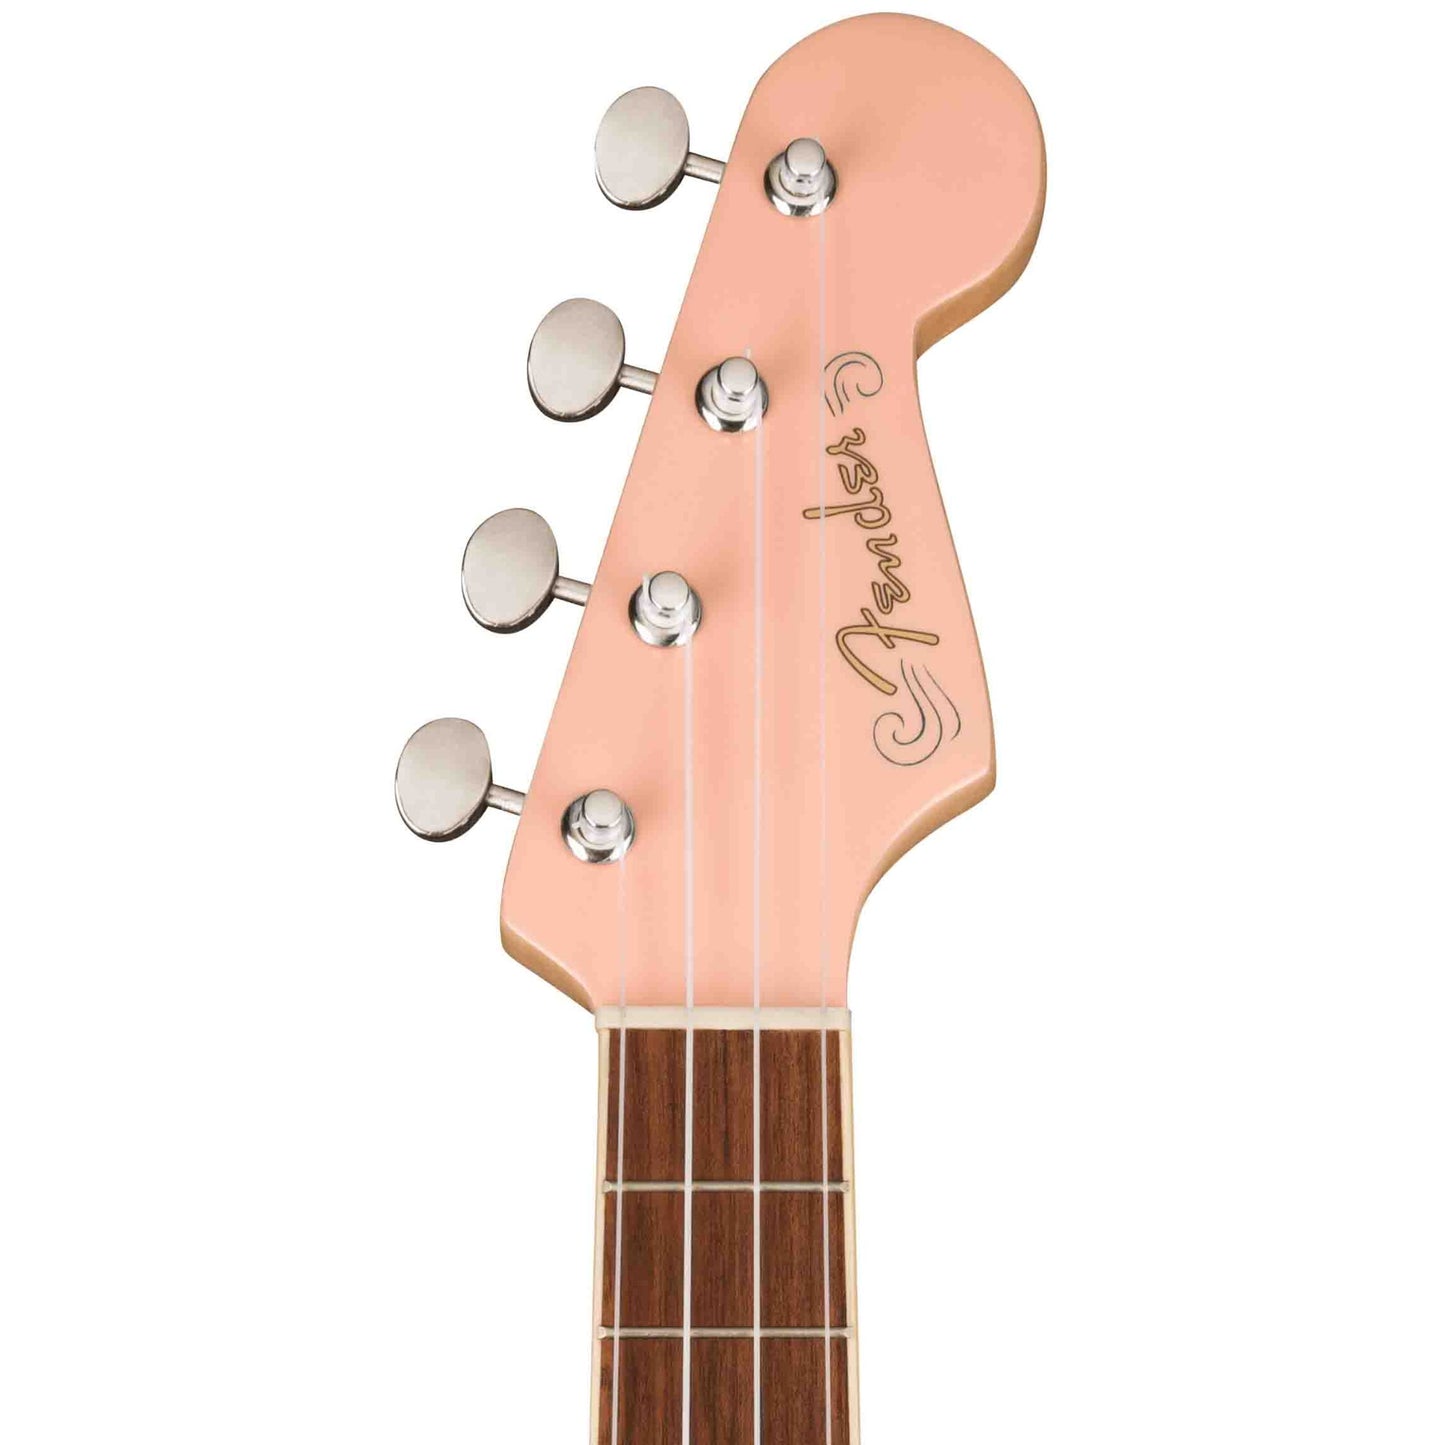 Fender Fullerton Jazzmaster Ukulele - Shell Pink, Walnut Fingerboard